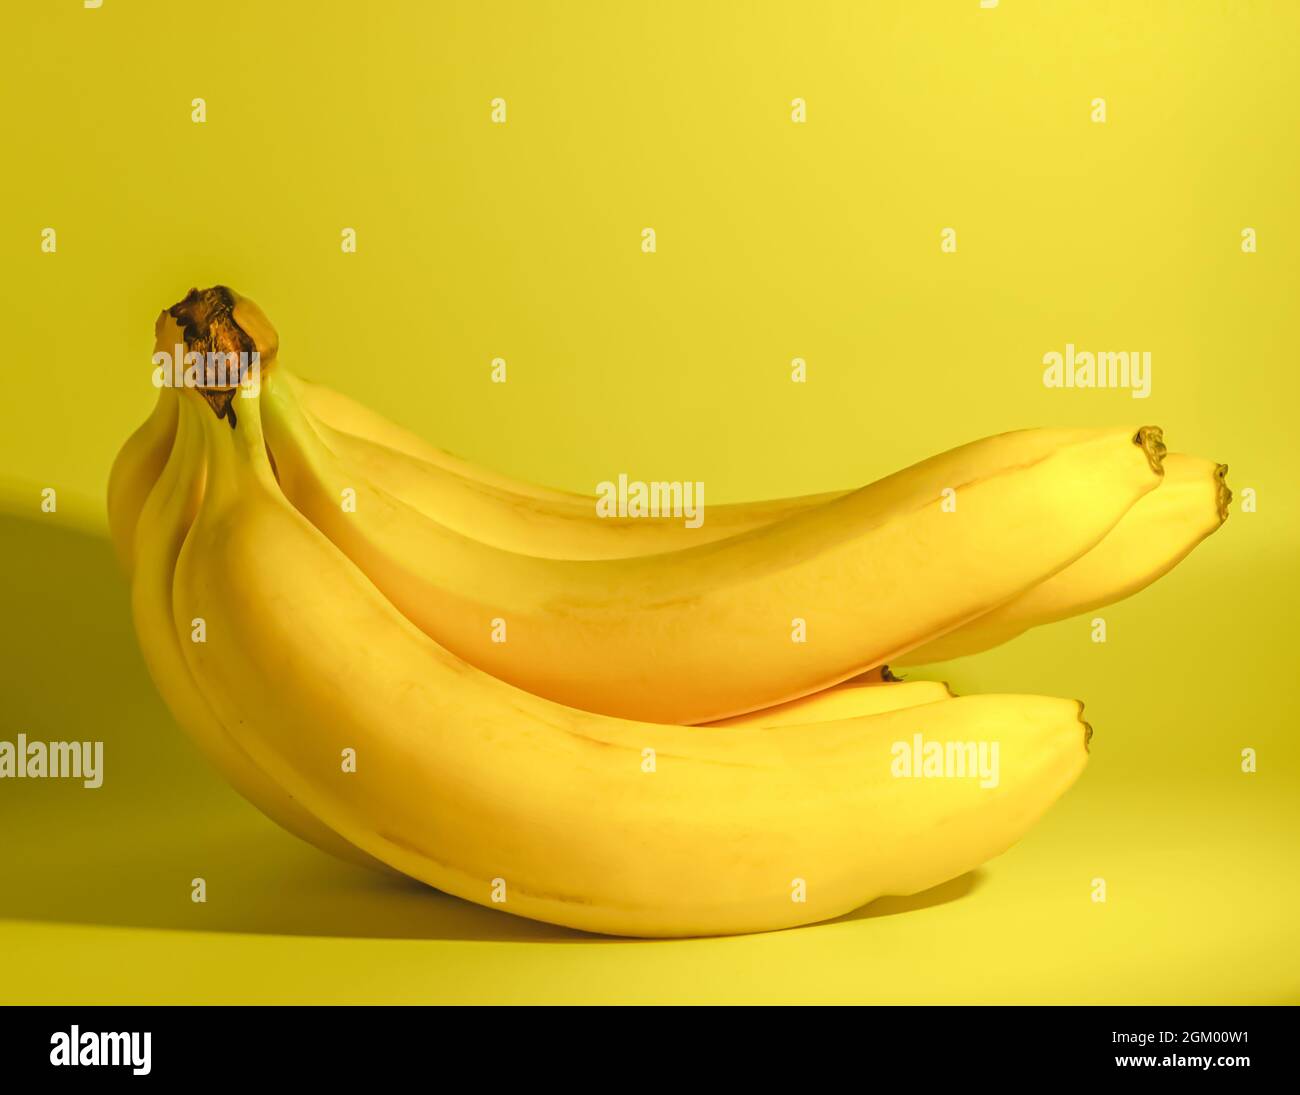 A bunch of fresh ripe bananas lies on a yellow background. Horizontal photo. Stock Photo